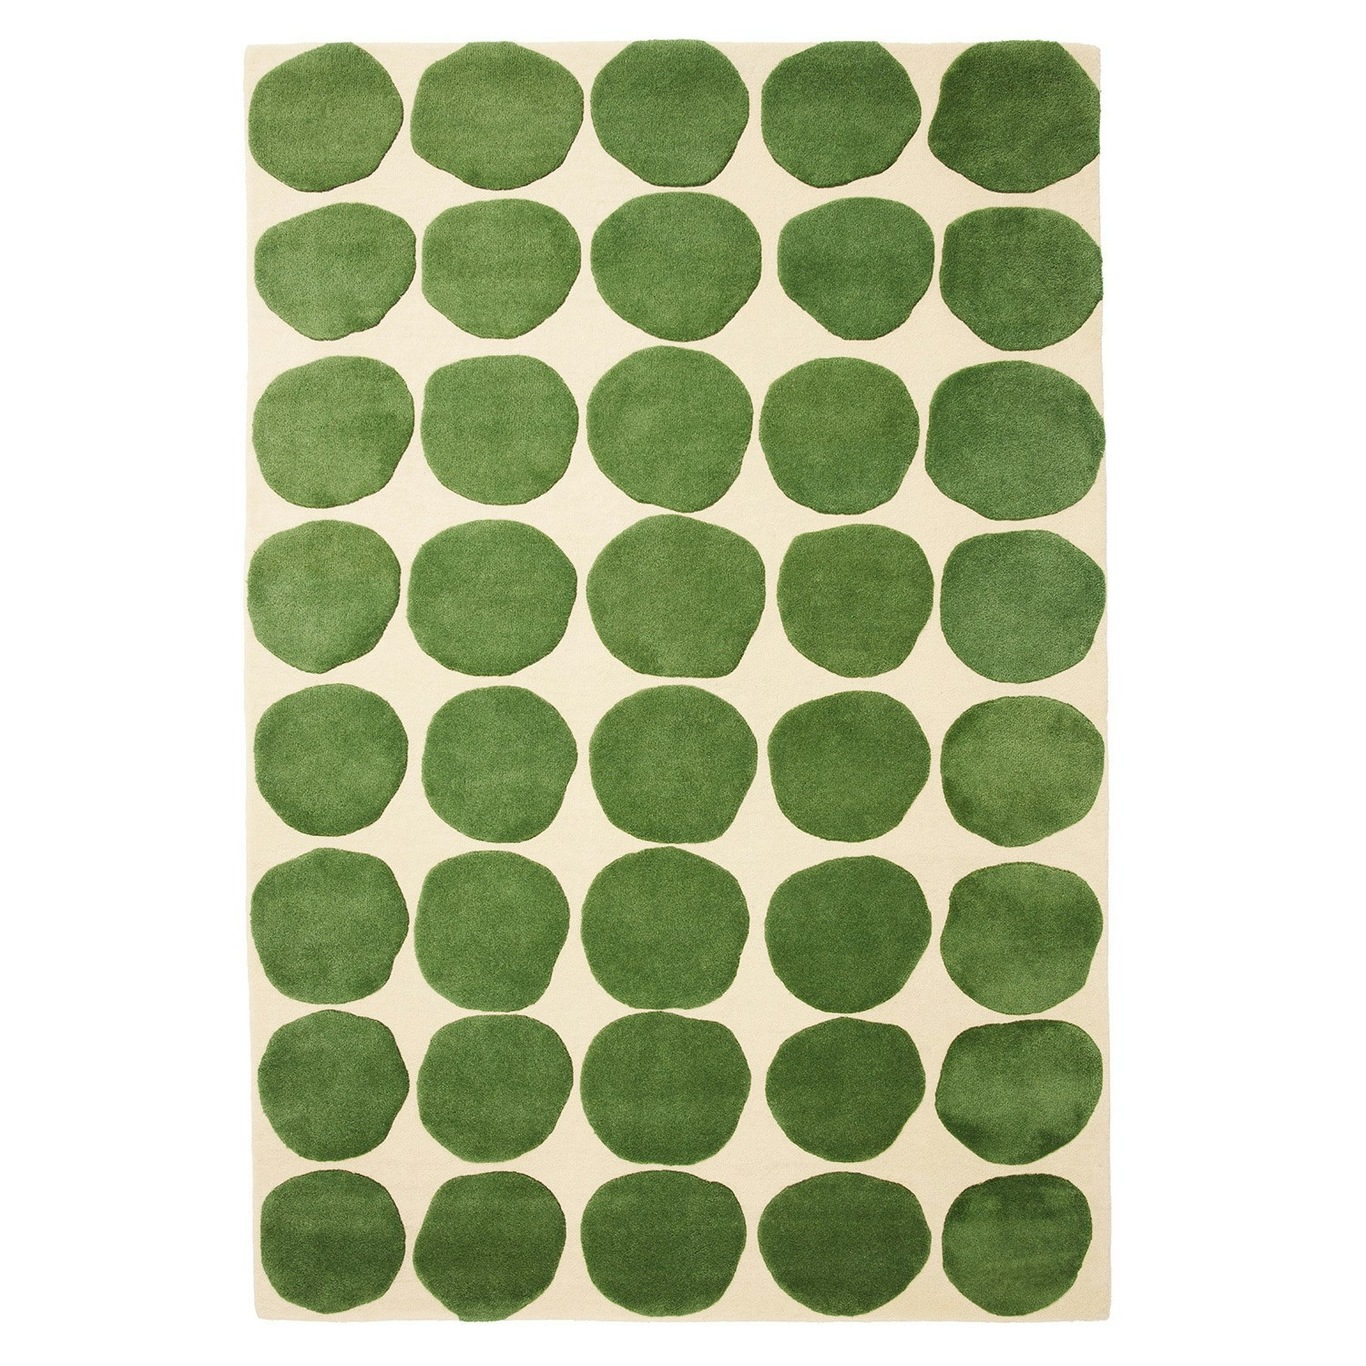 Dots 2 Level Matto Light Khaki / Cactus Green, 230x320_cm cm